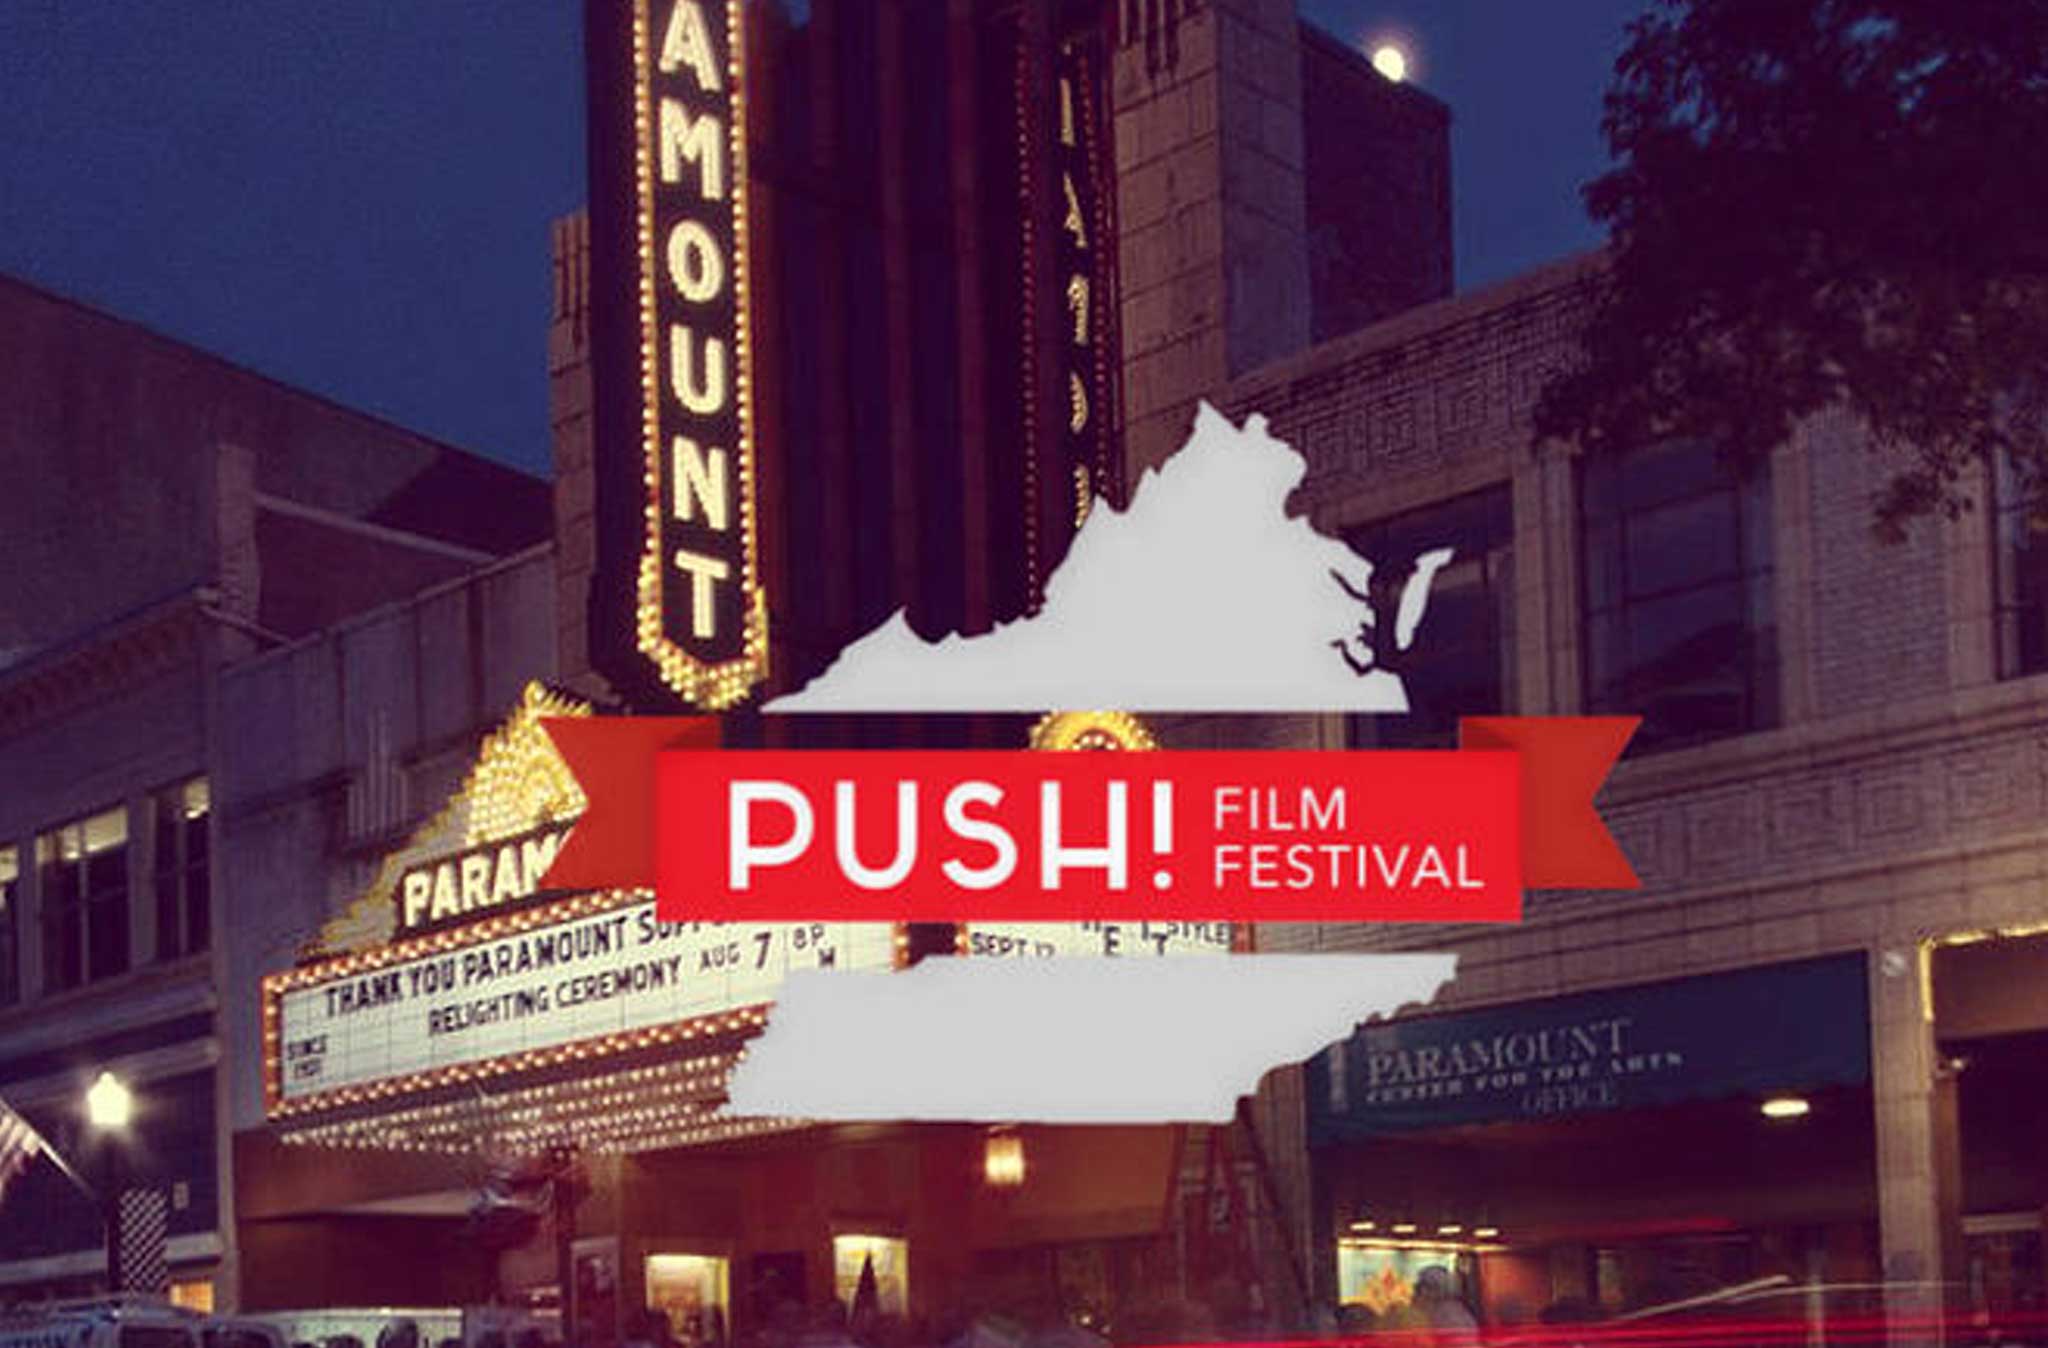 Believe in Bristol Presents: PUSH! Film Festival